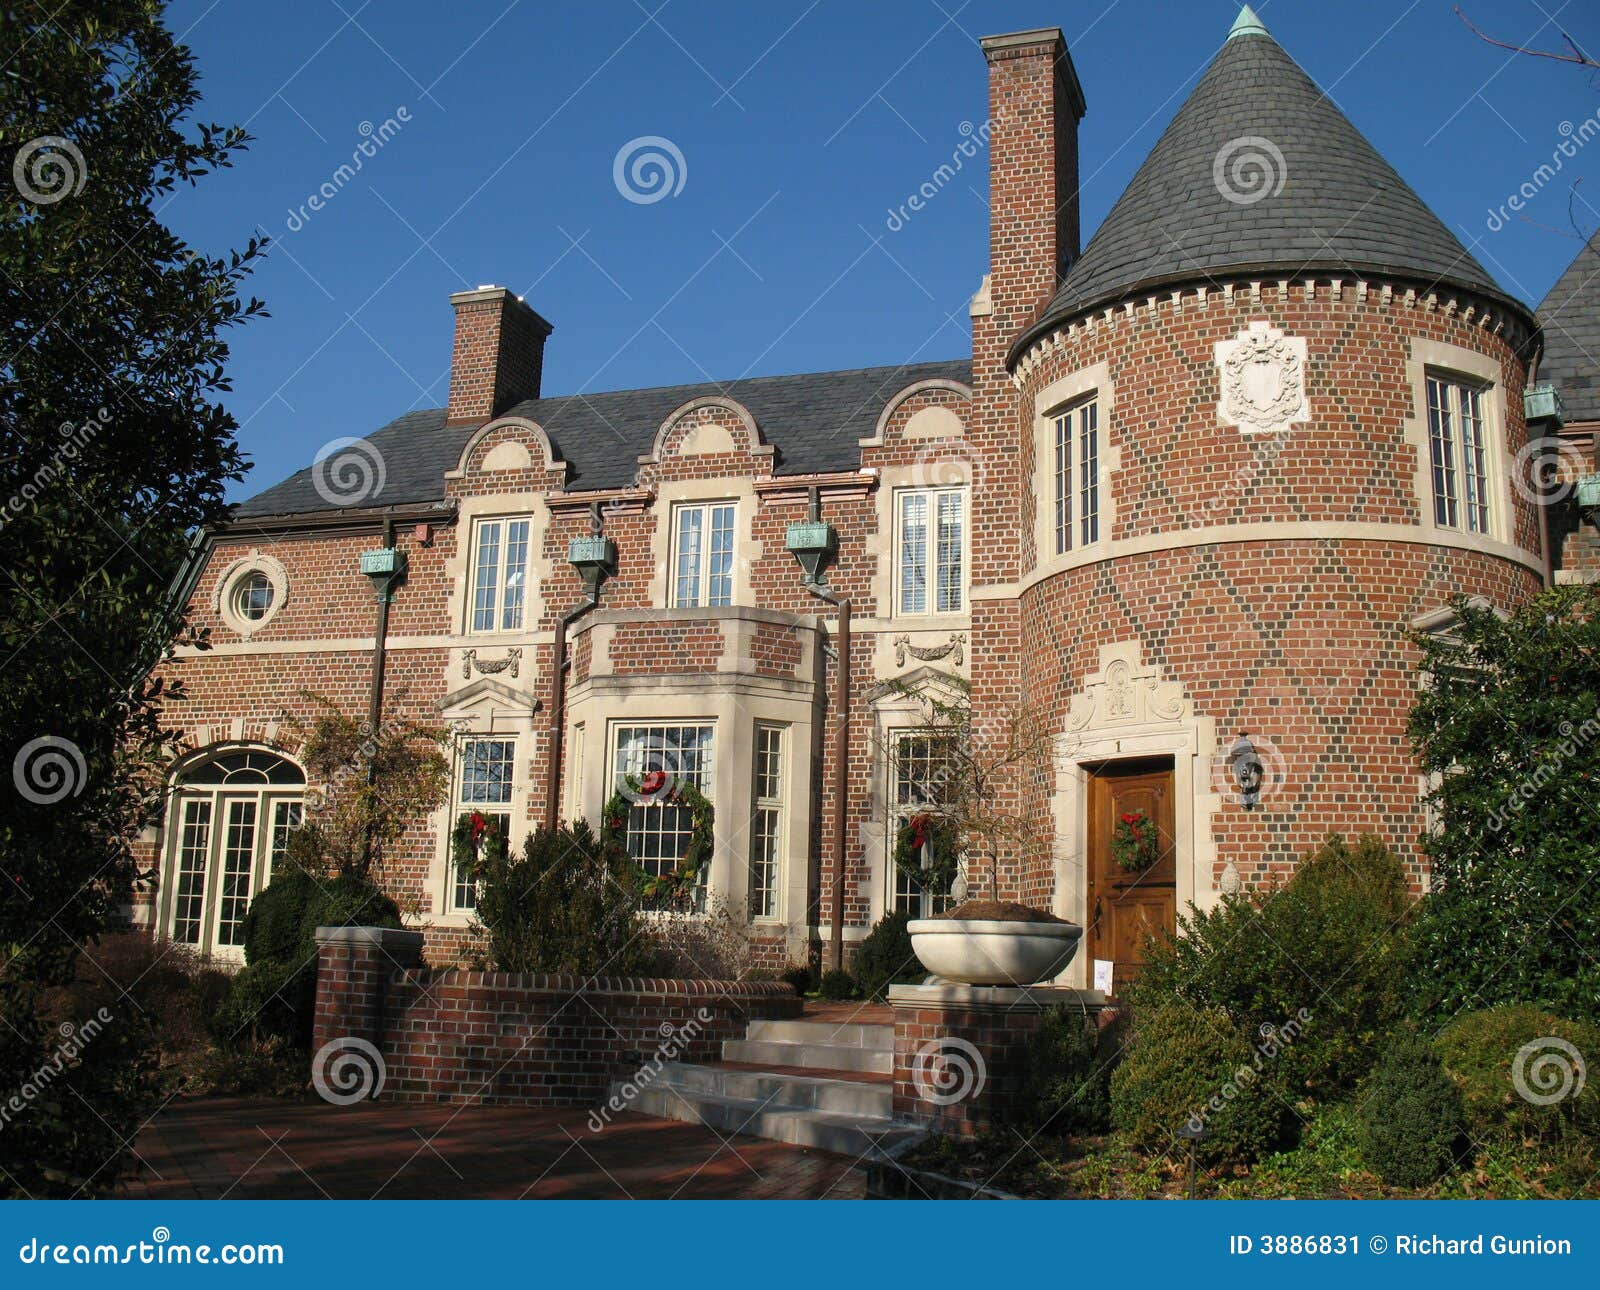 suburban-mansion-3886831.jpg